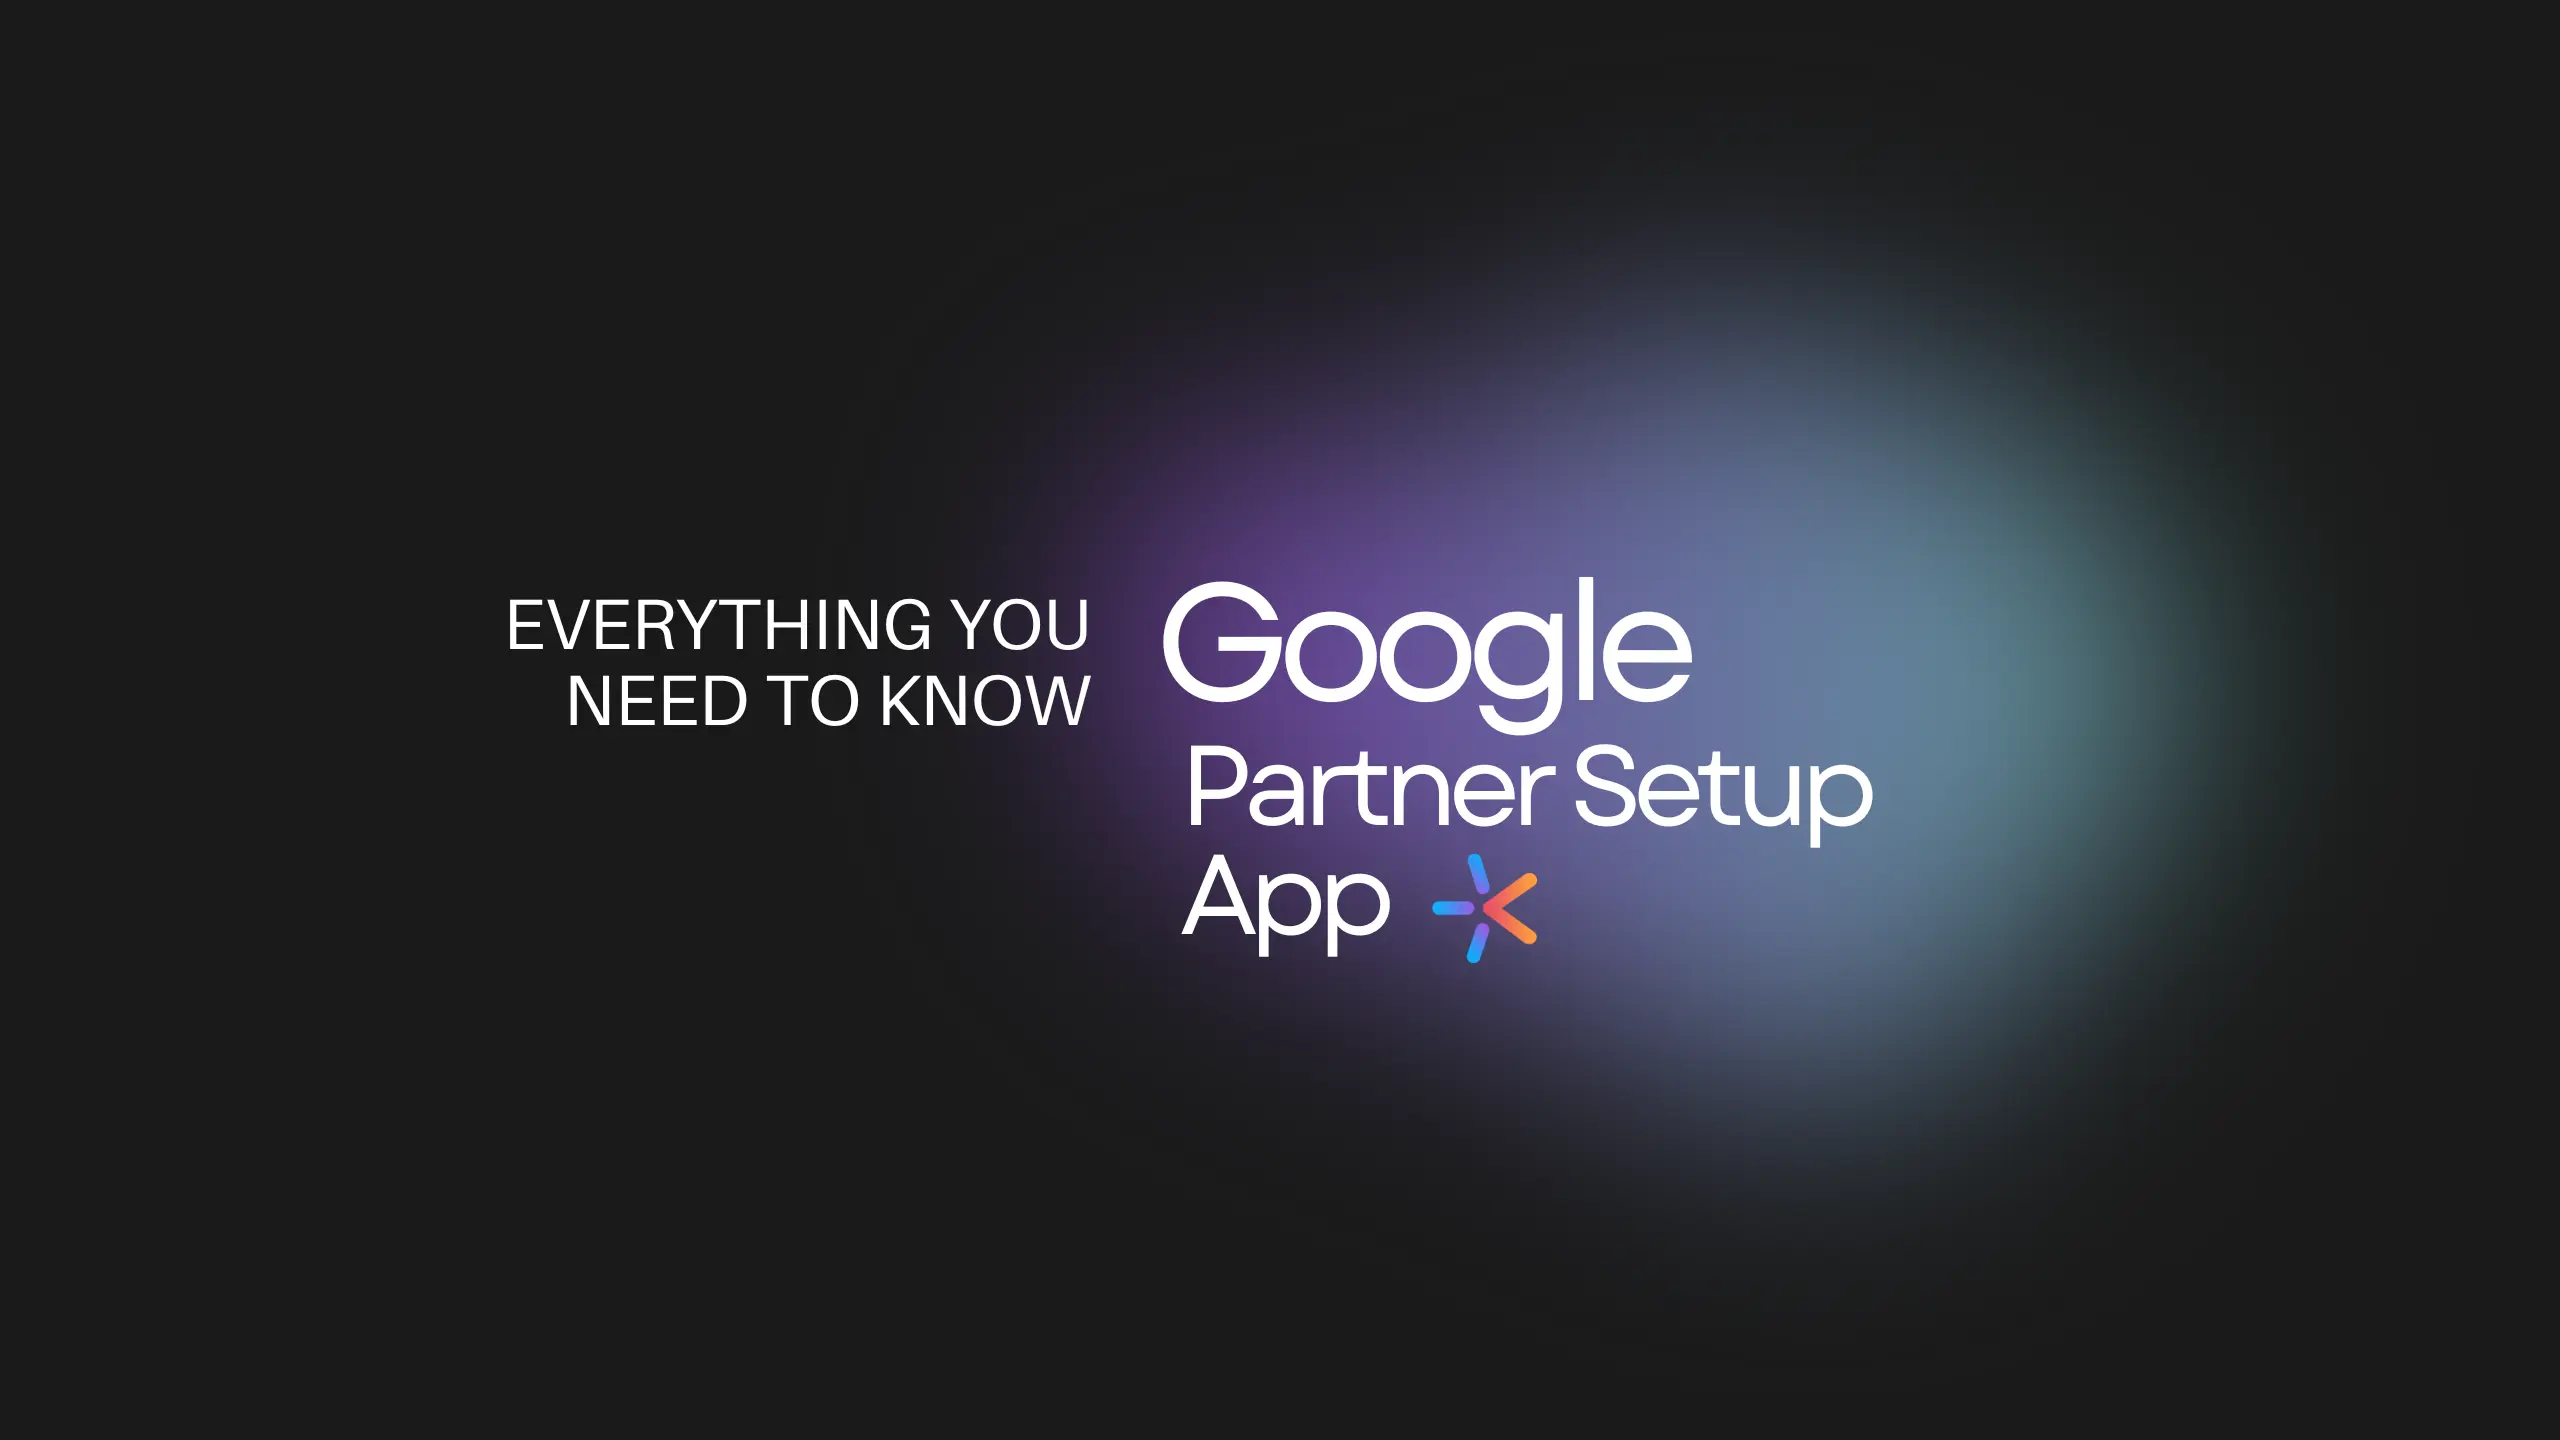 Google partner setup app banner